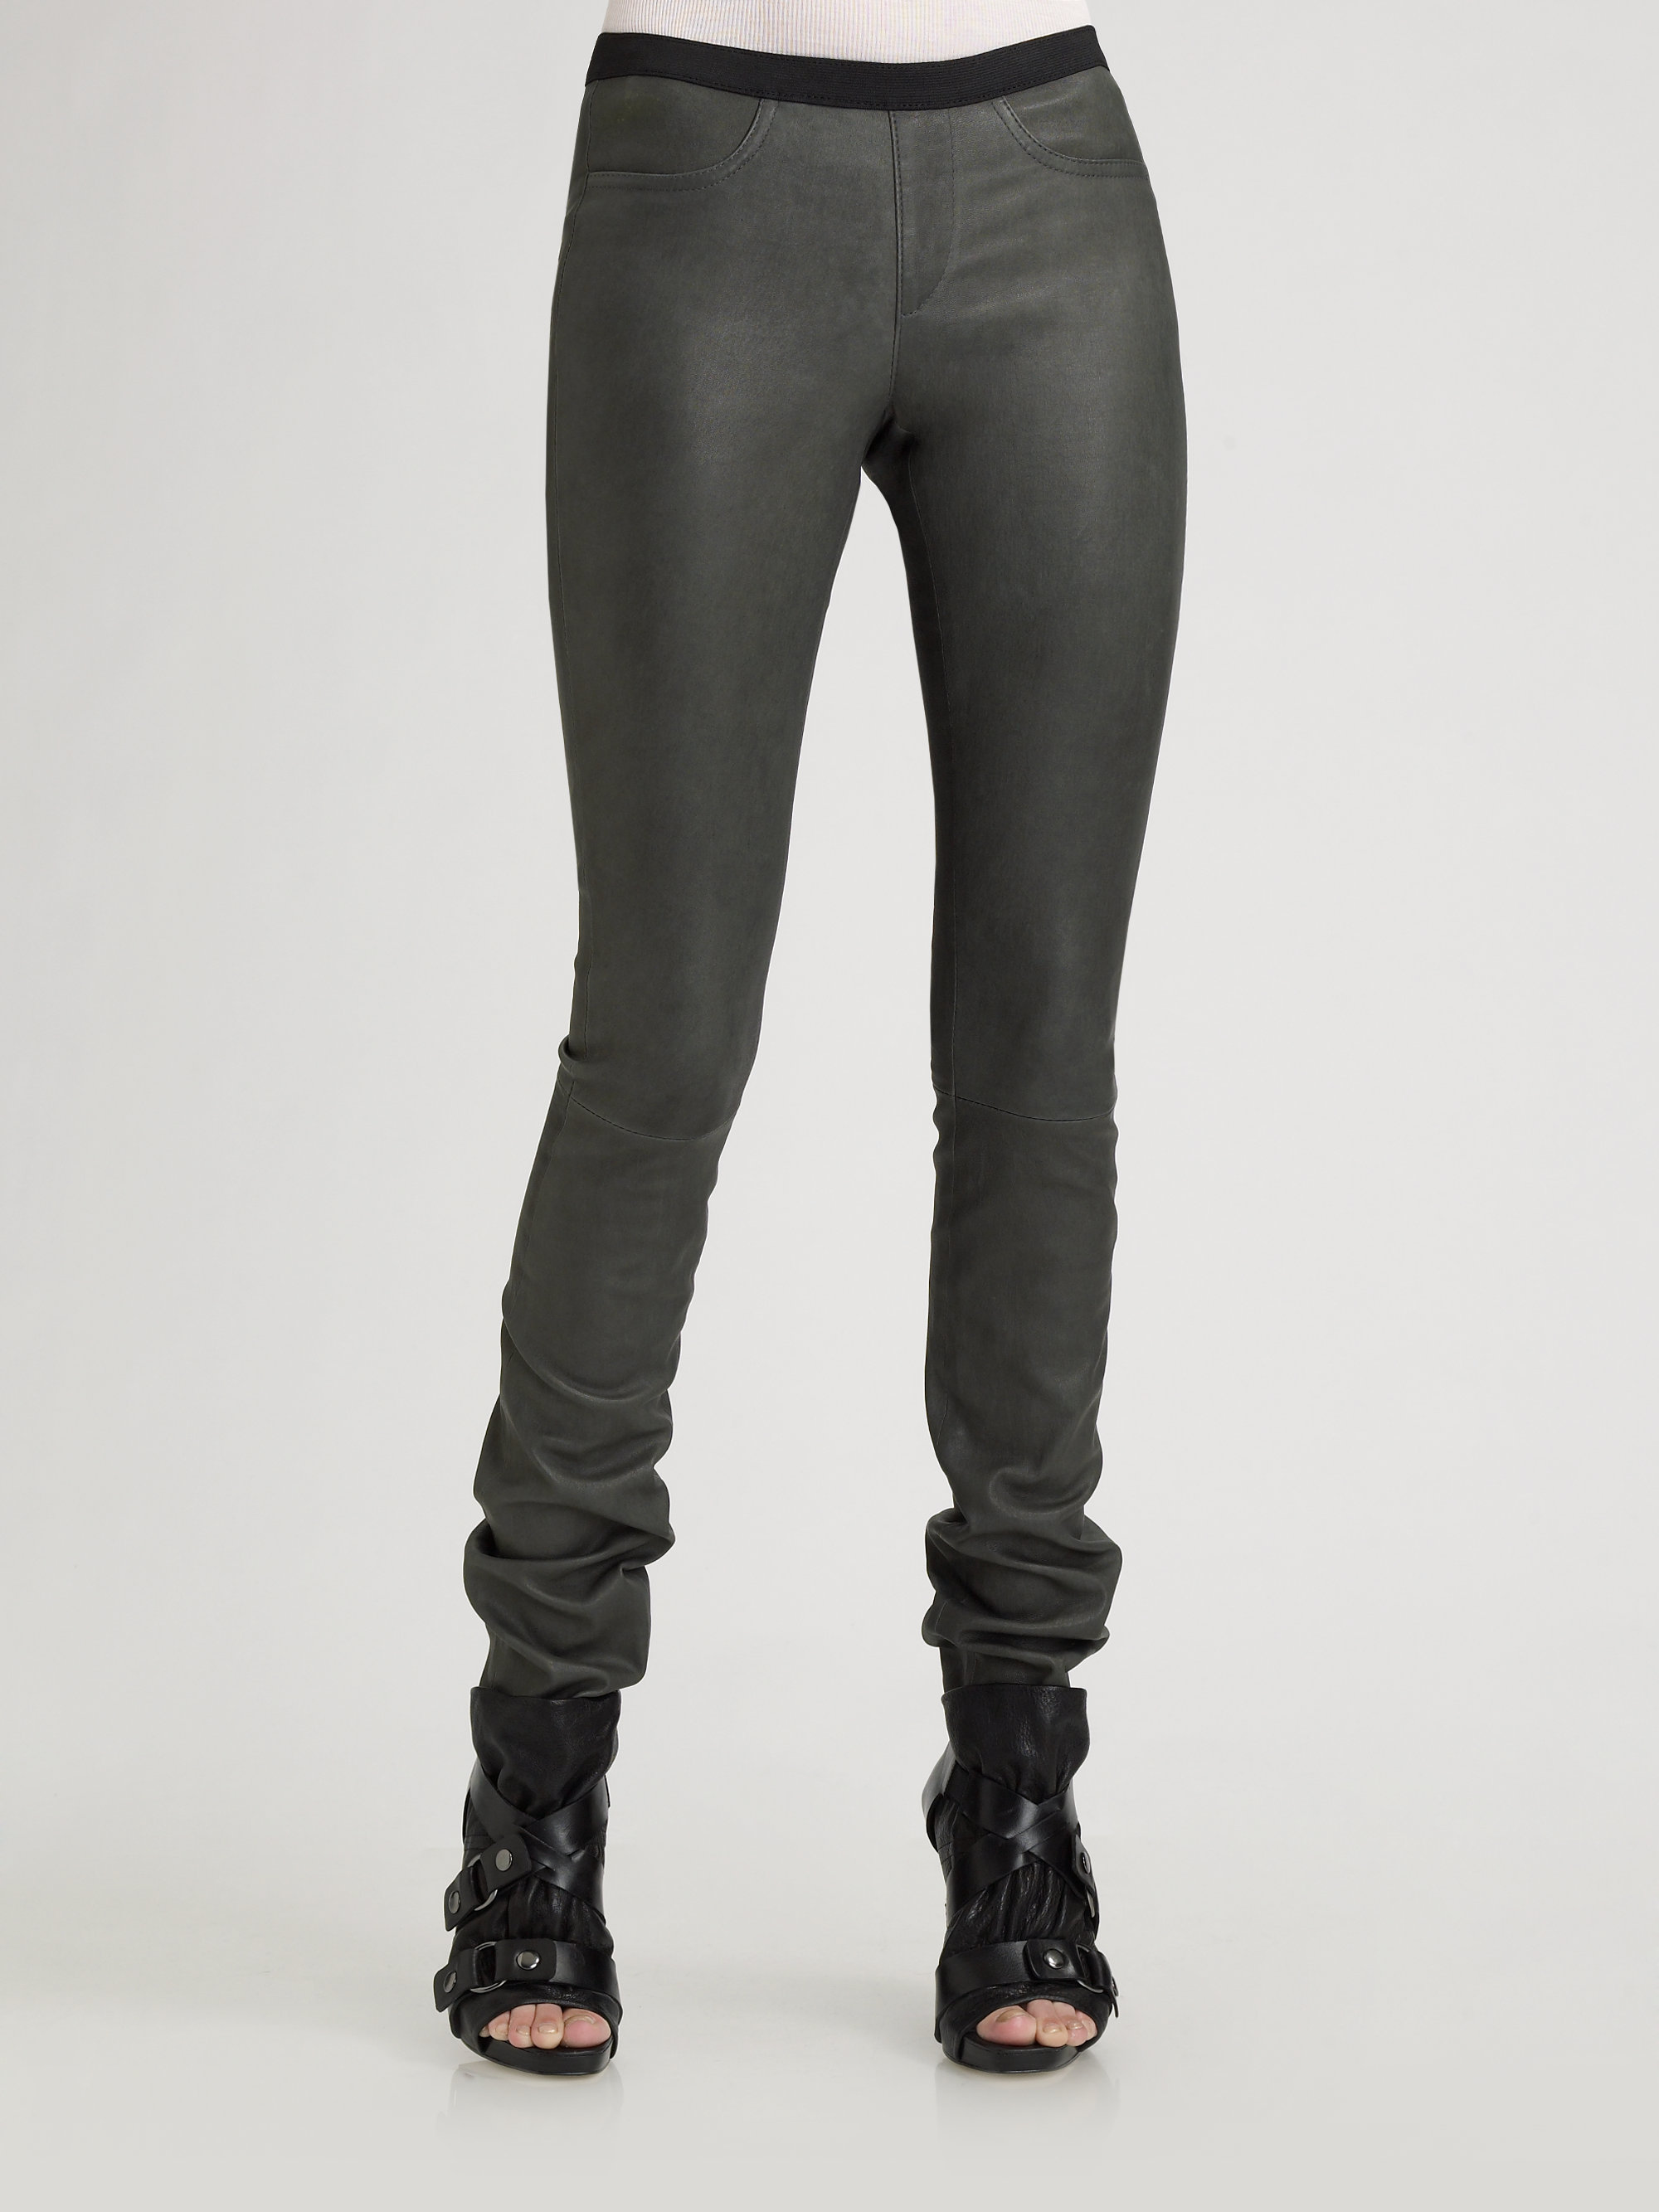 leather pants grey